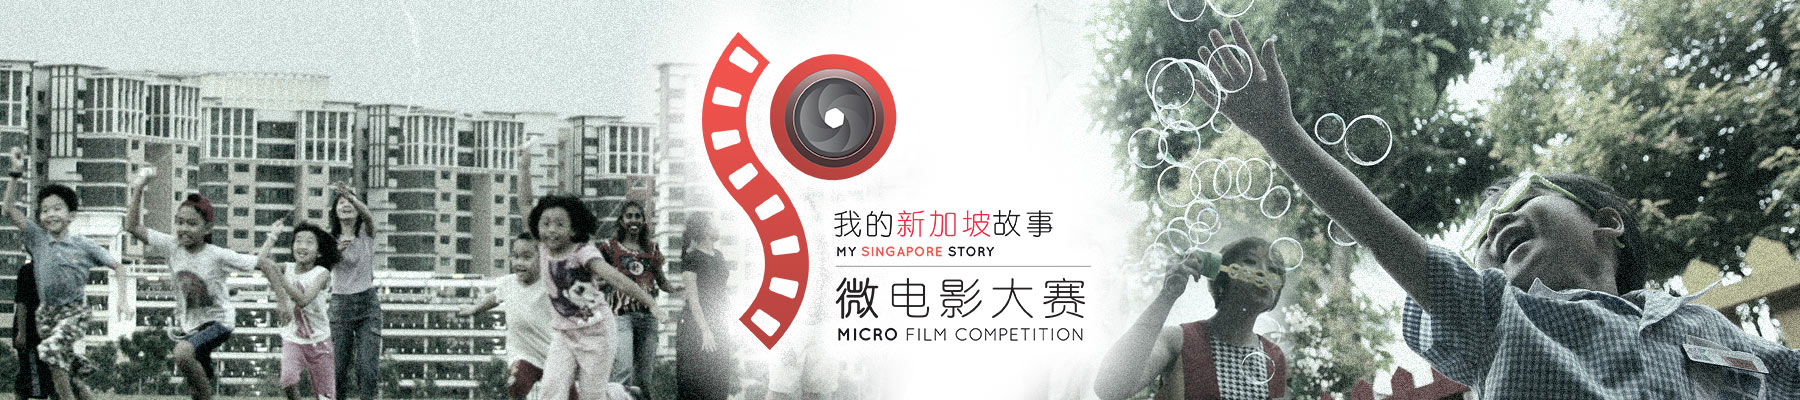 “我的新加坡故事”微电影比赛 ‘My Singapore Story’ Micro Film Competition